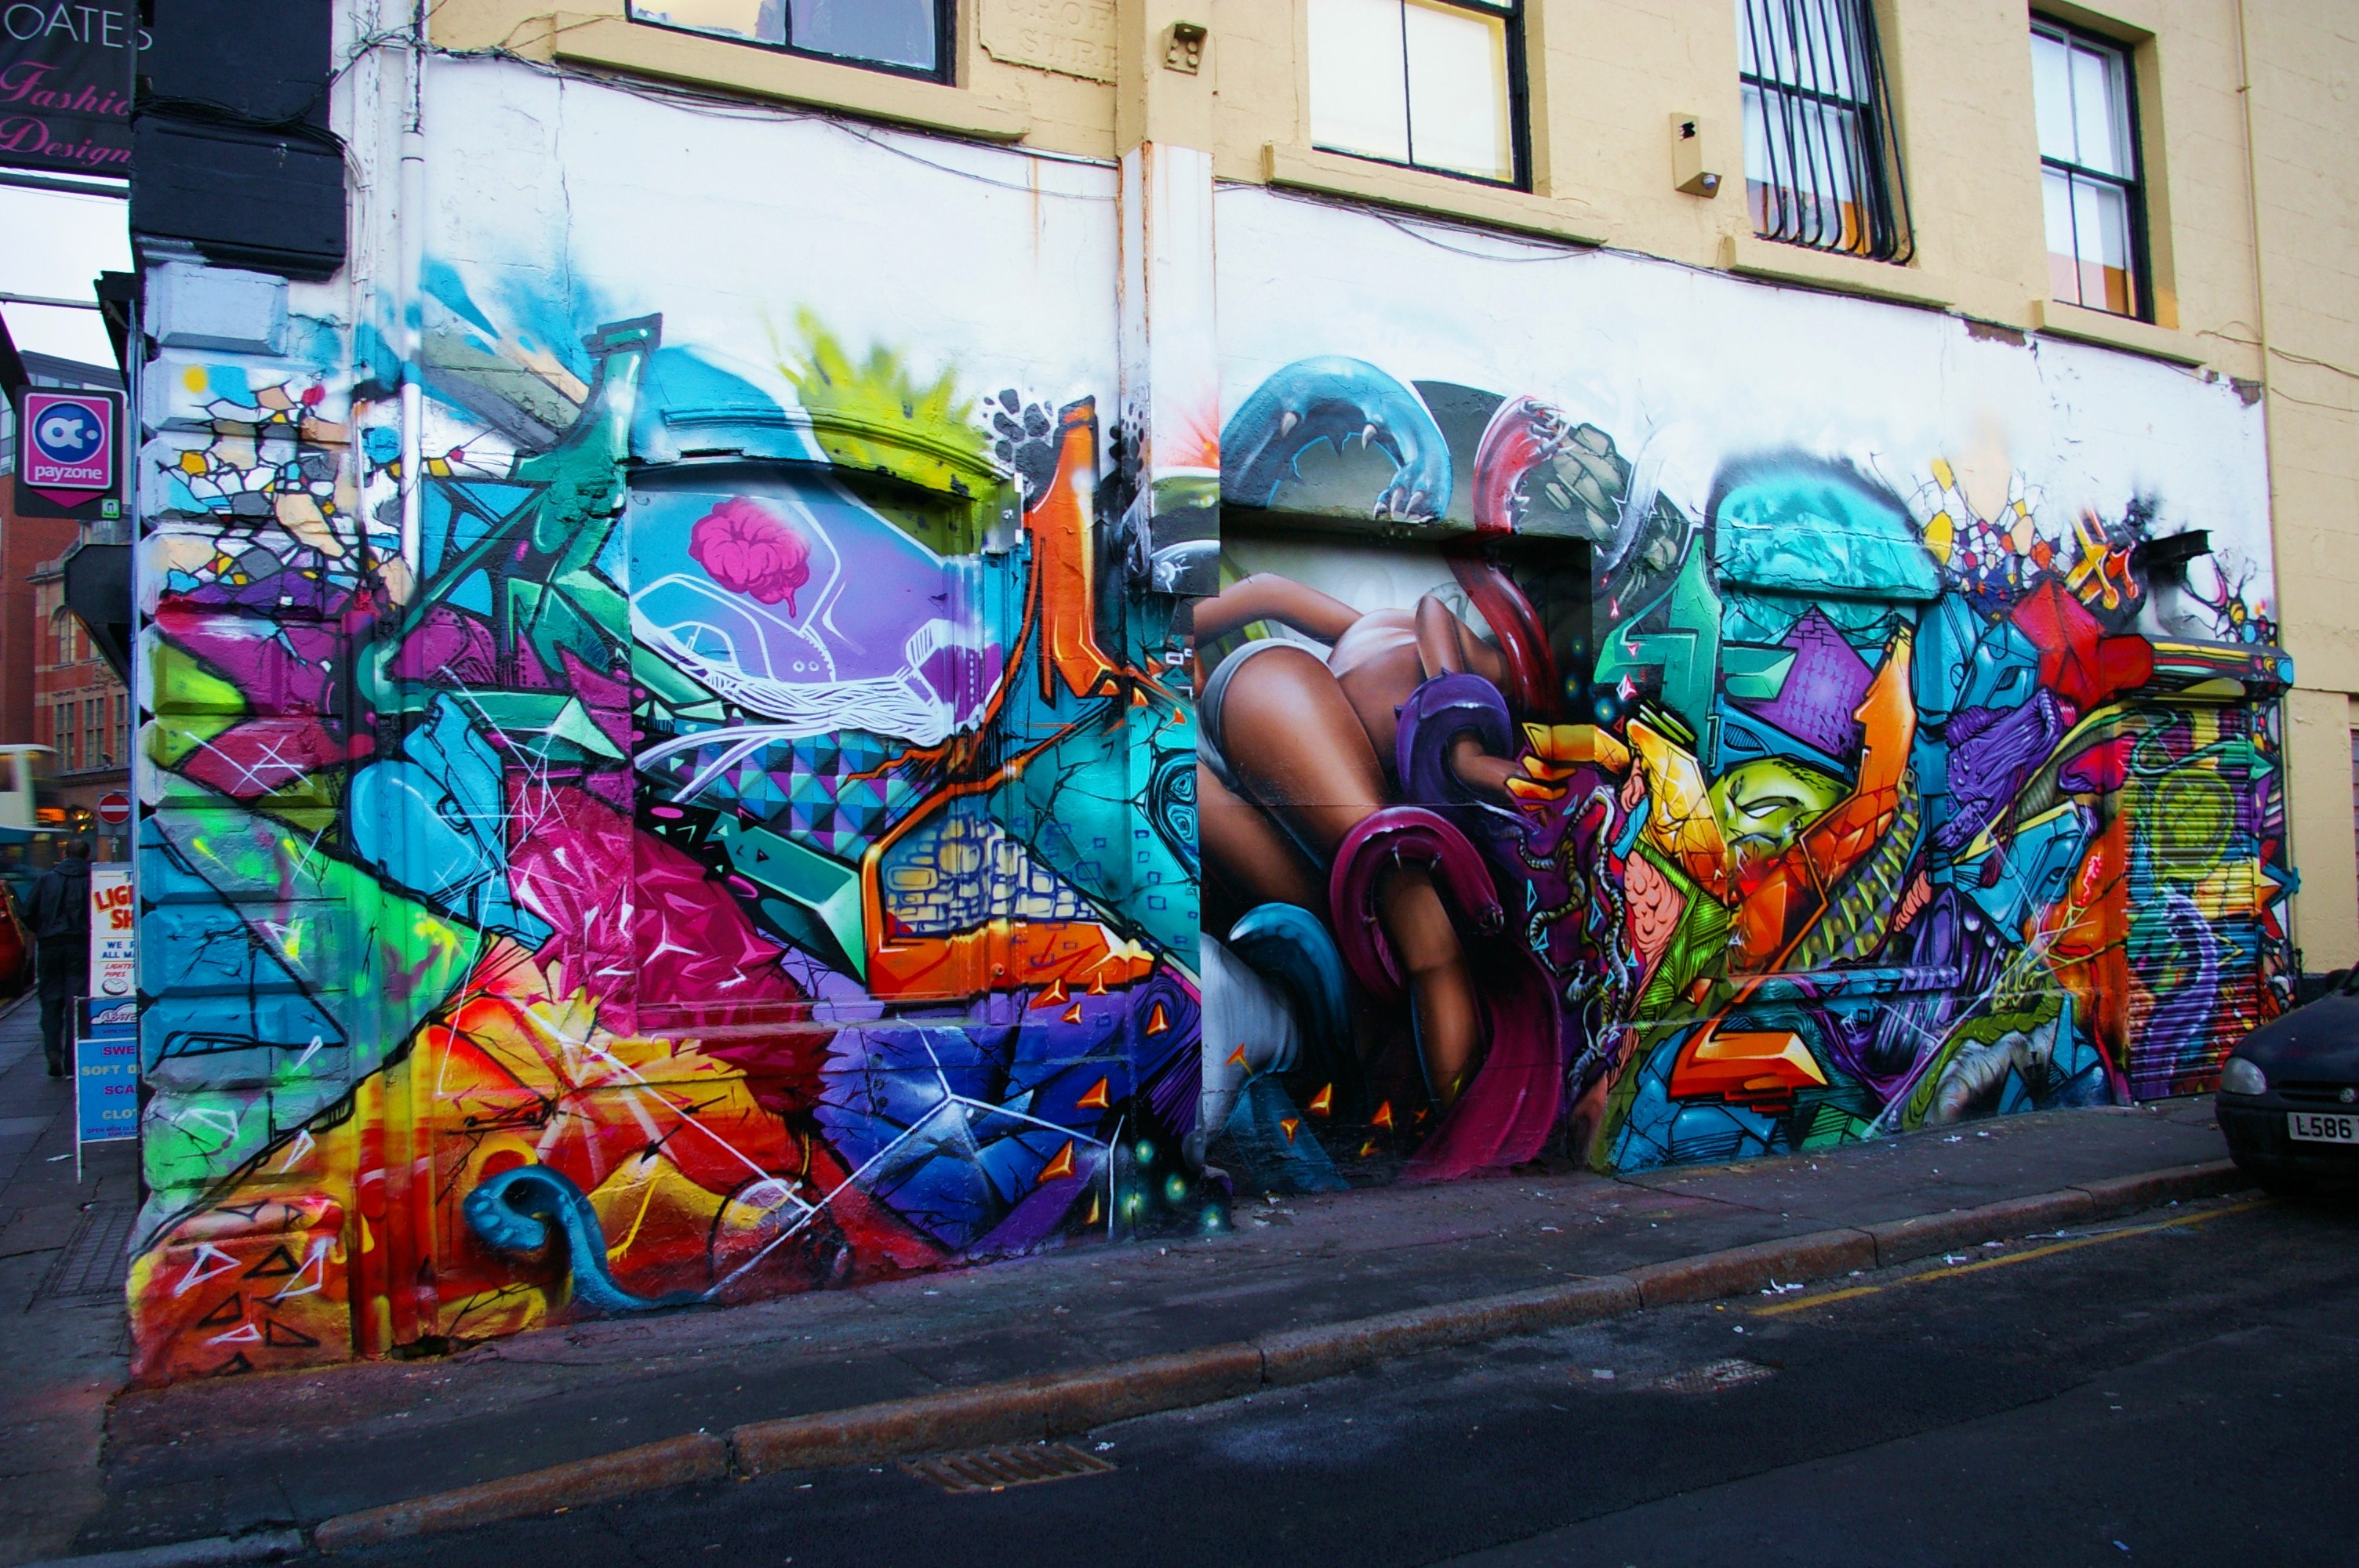 Walls for artists - Zap Graffiti Liverpool